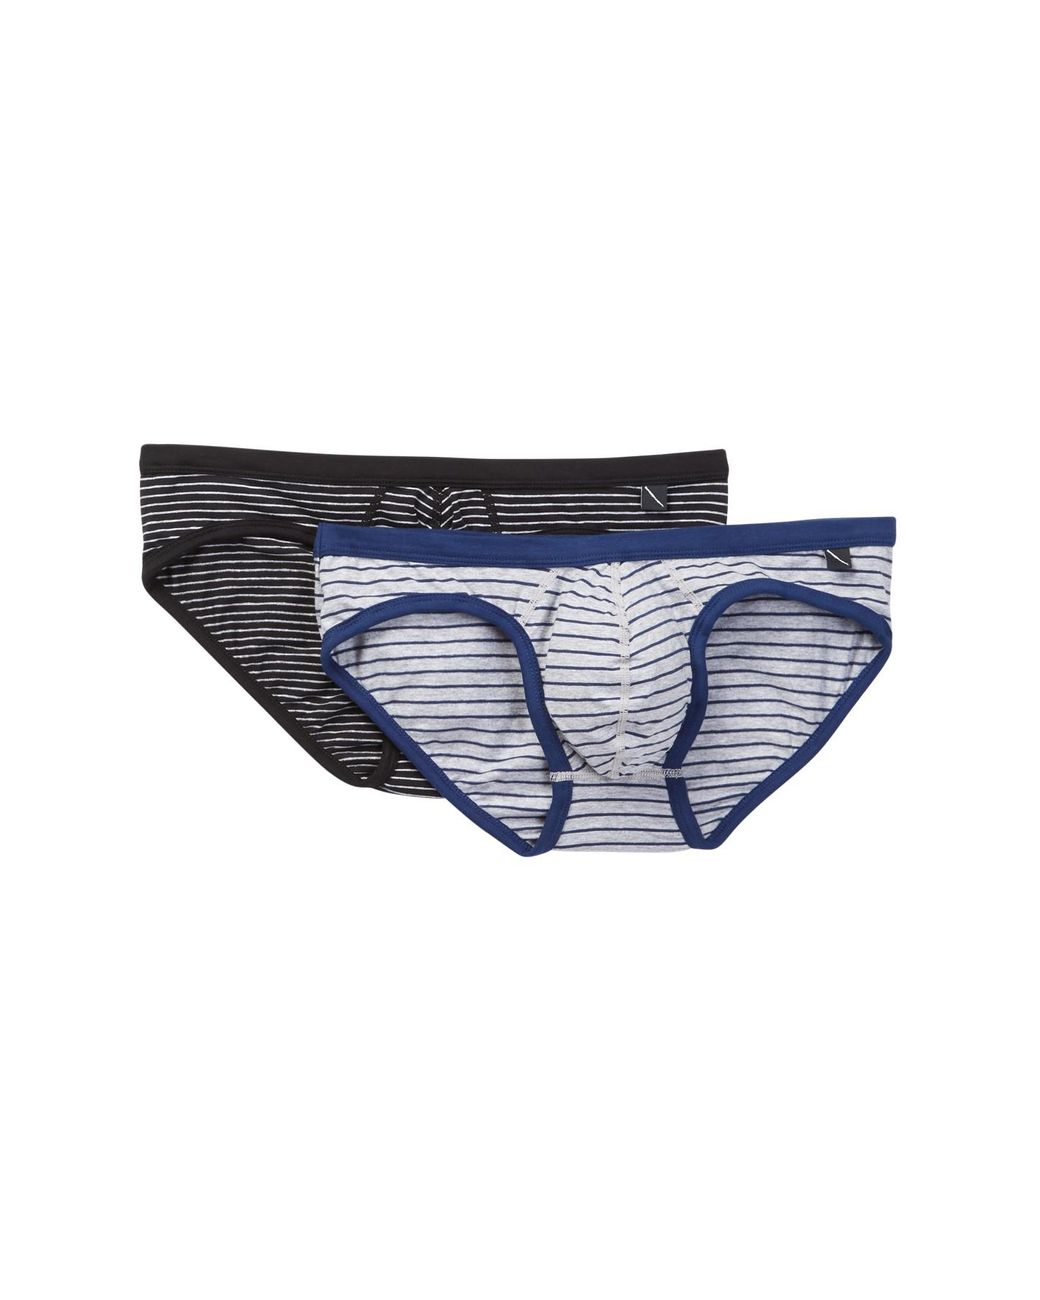 2xist Men's 4-Pack Essential Cotton Bikini Heather Grey/White/Black